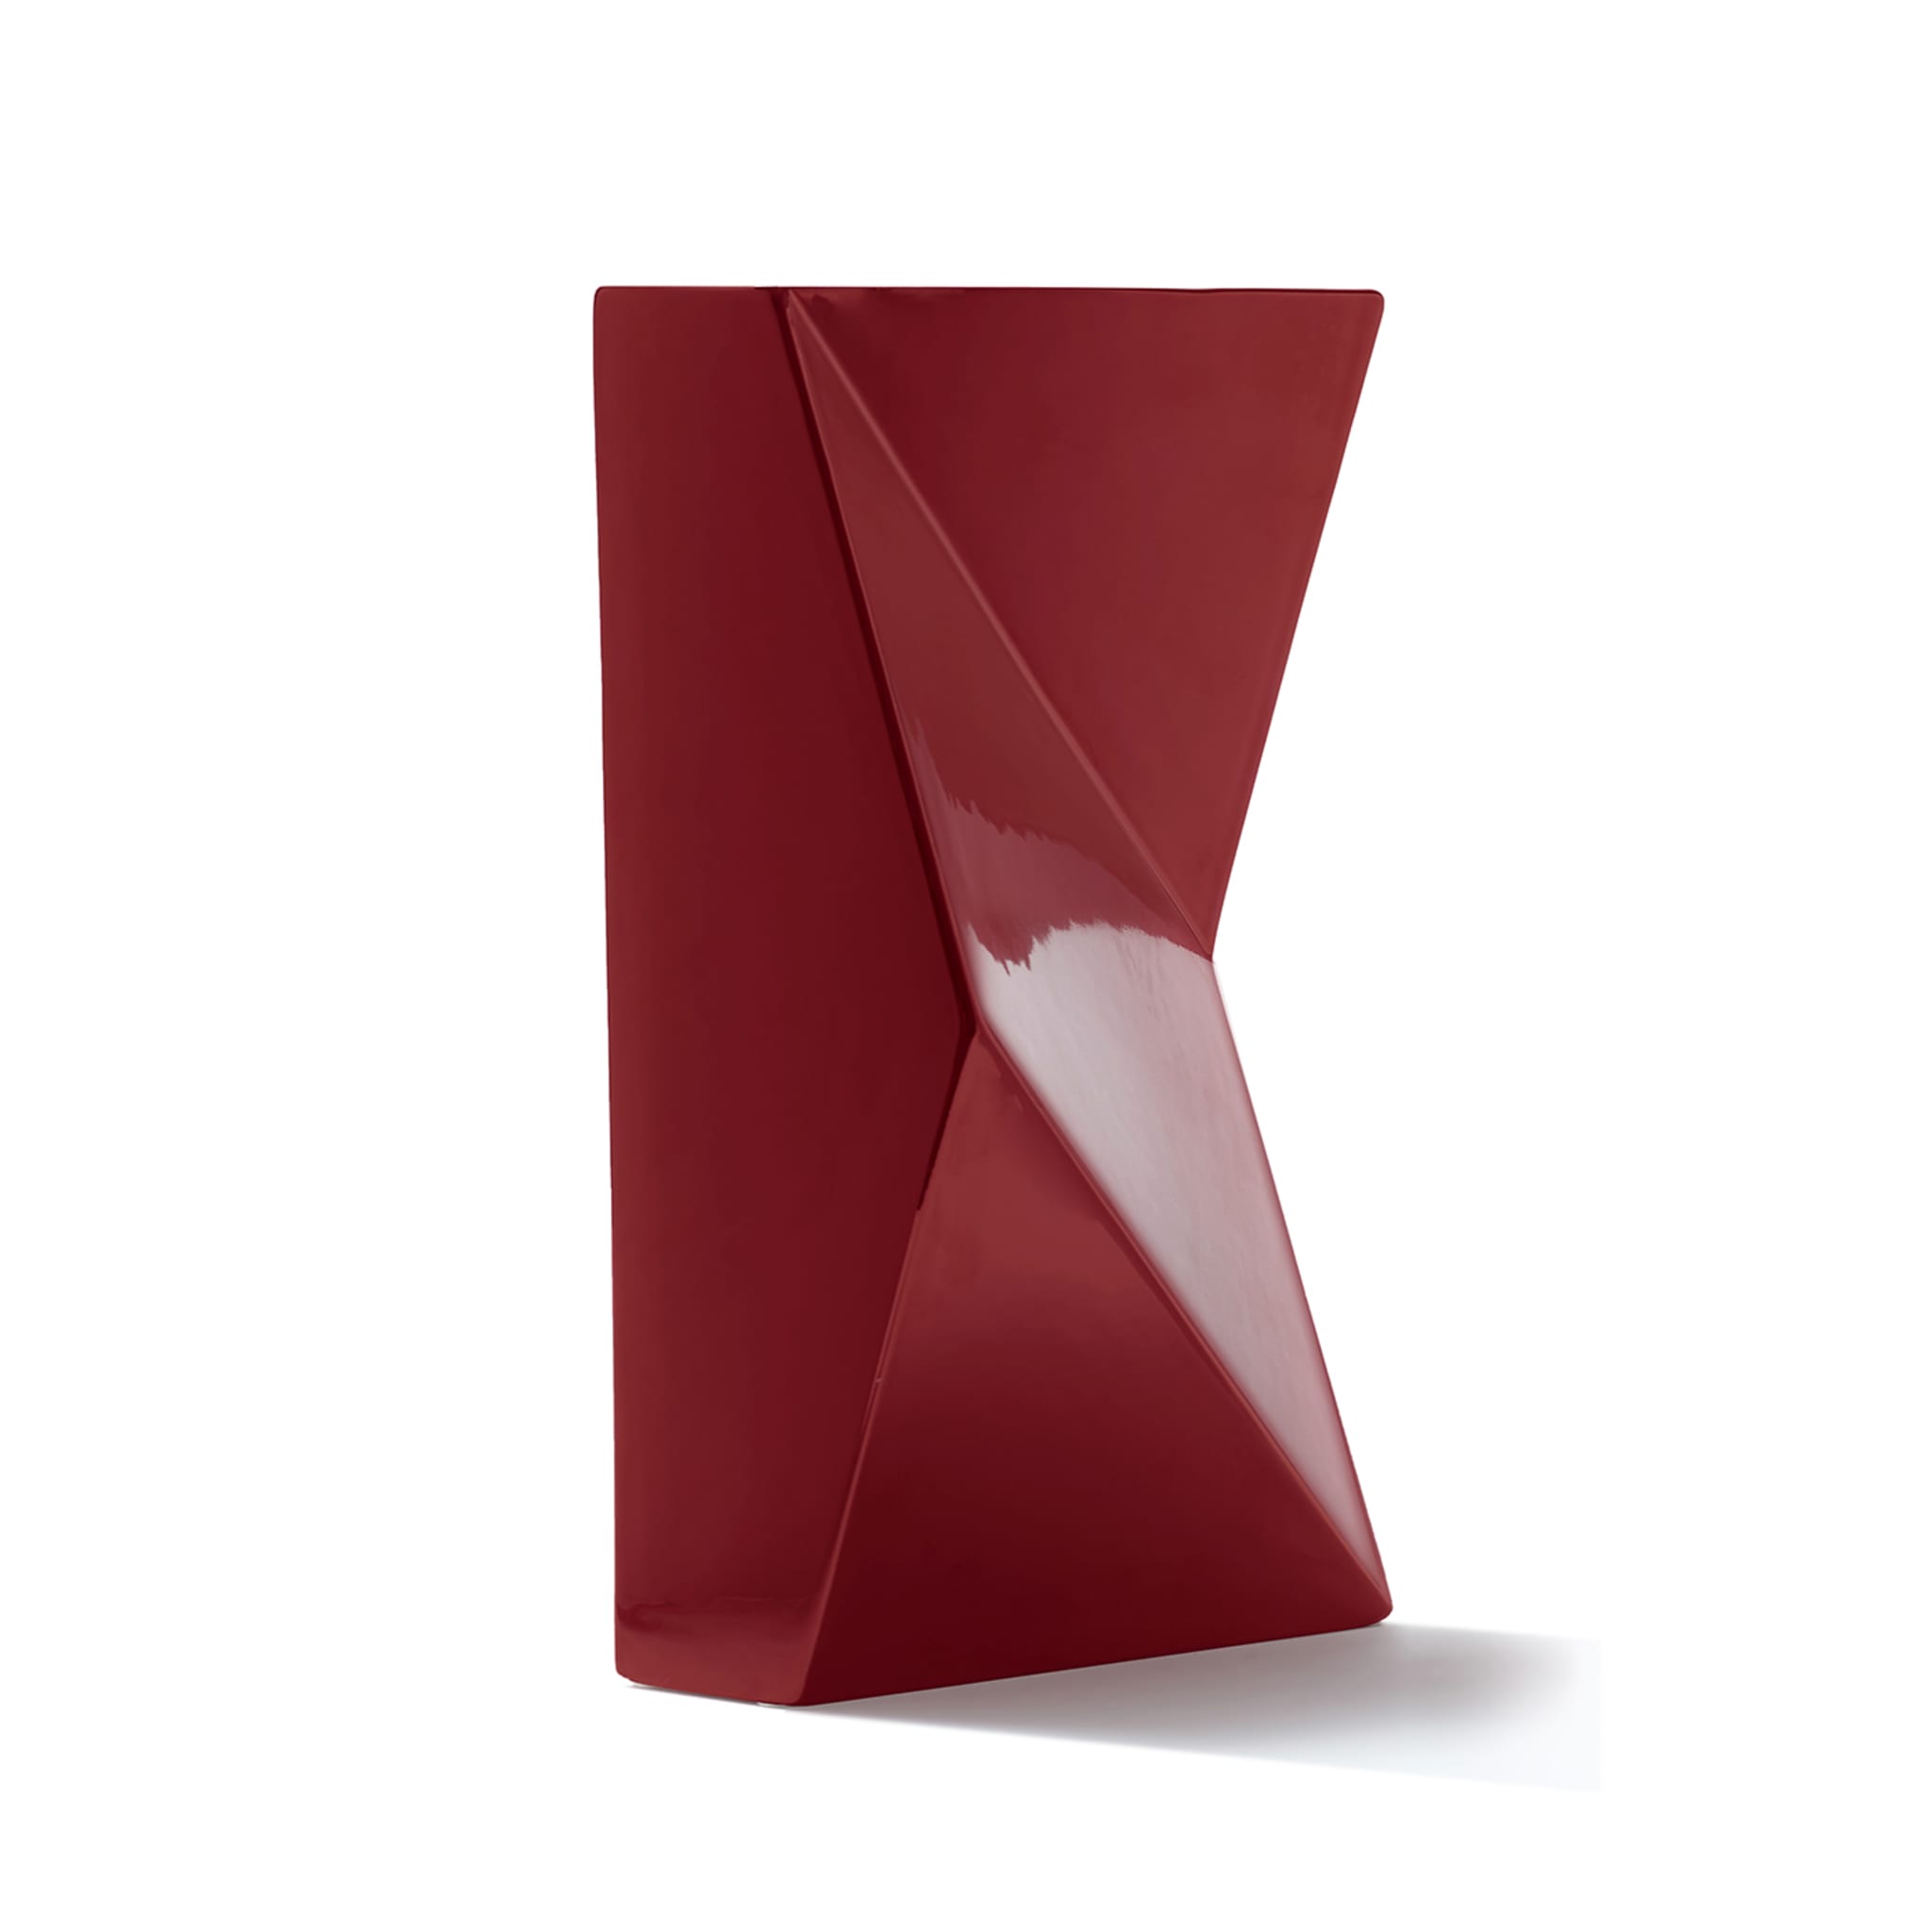 Rote Verso-Vase von Antonio Saporito - Alternative Ansicht 2